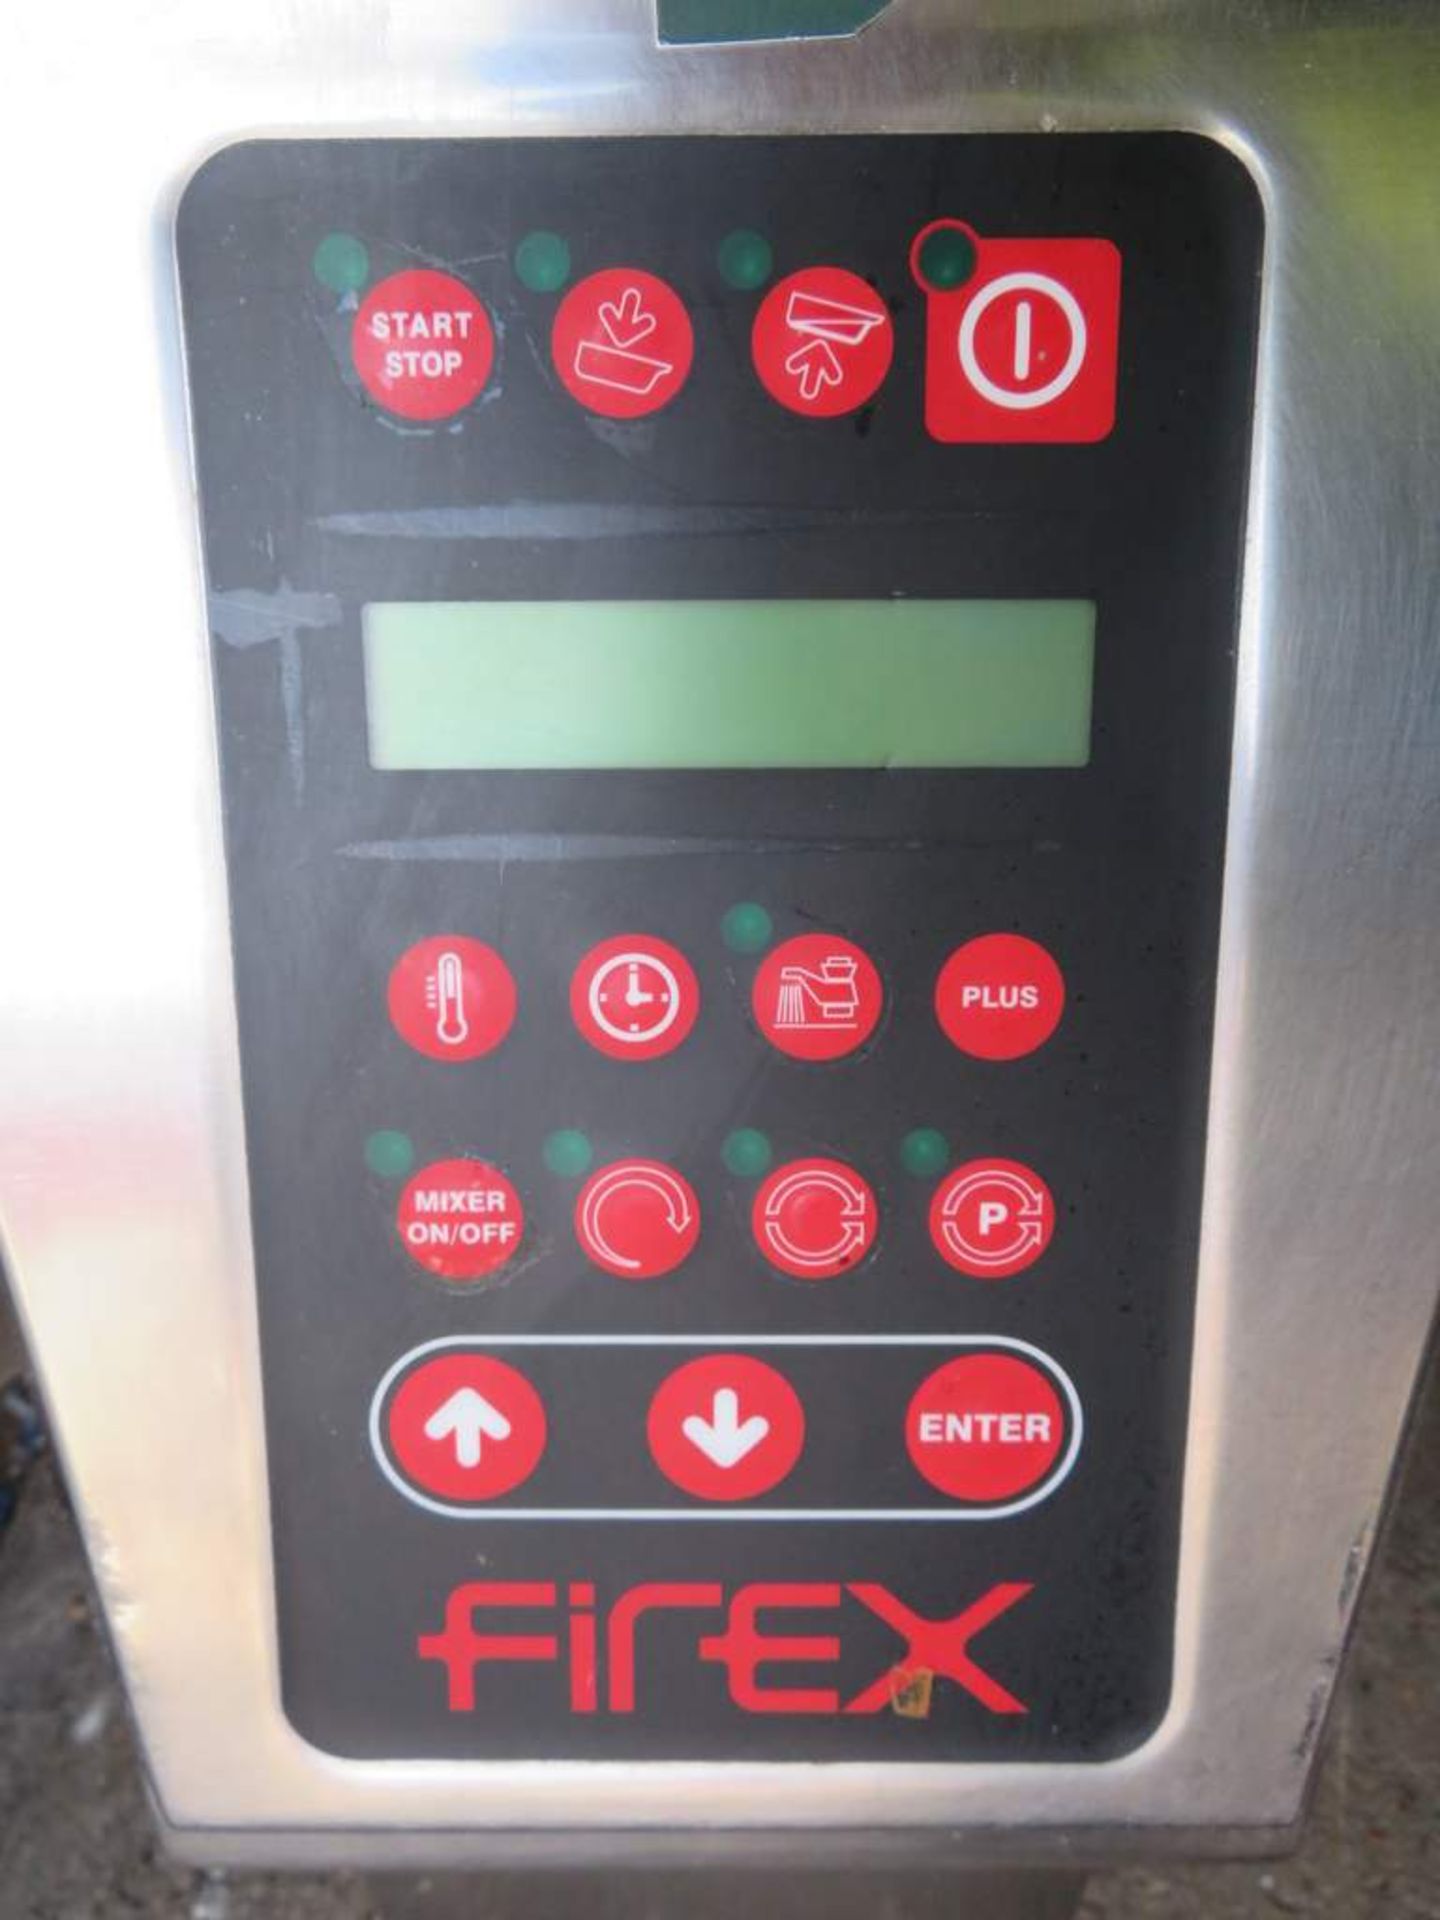 Firex Direct gas heating tilting brazing pan - Image 4 of 7